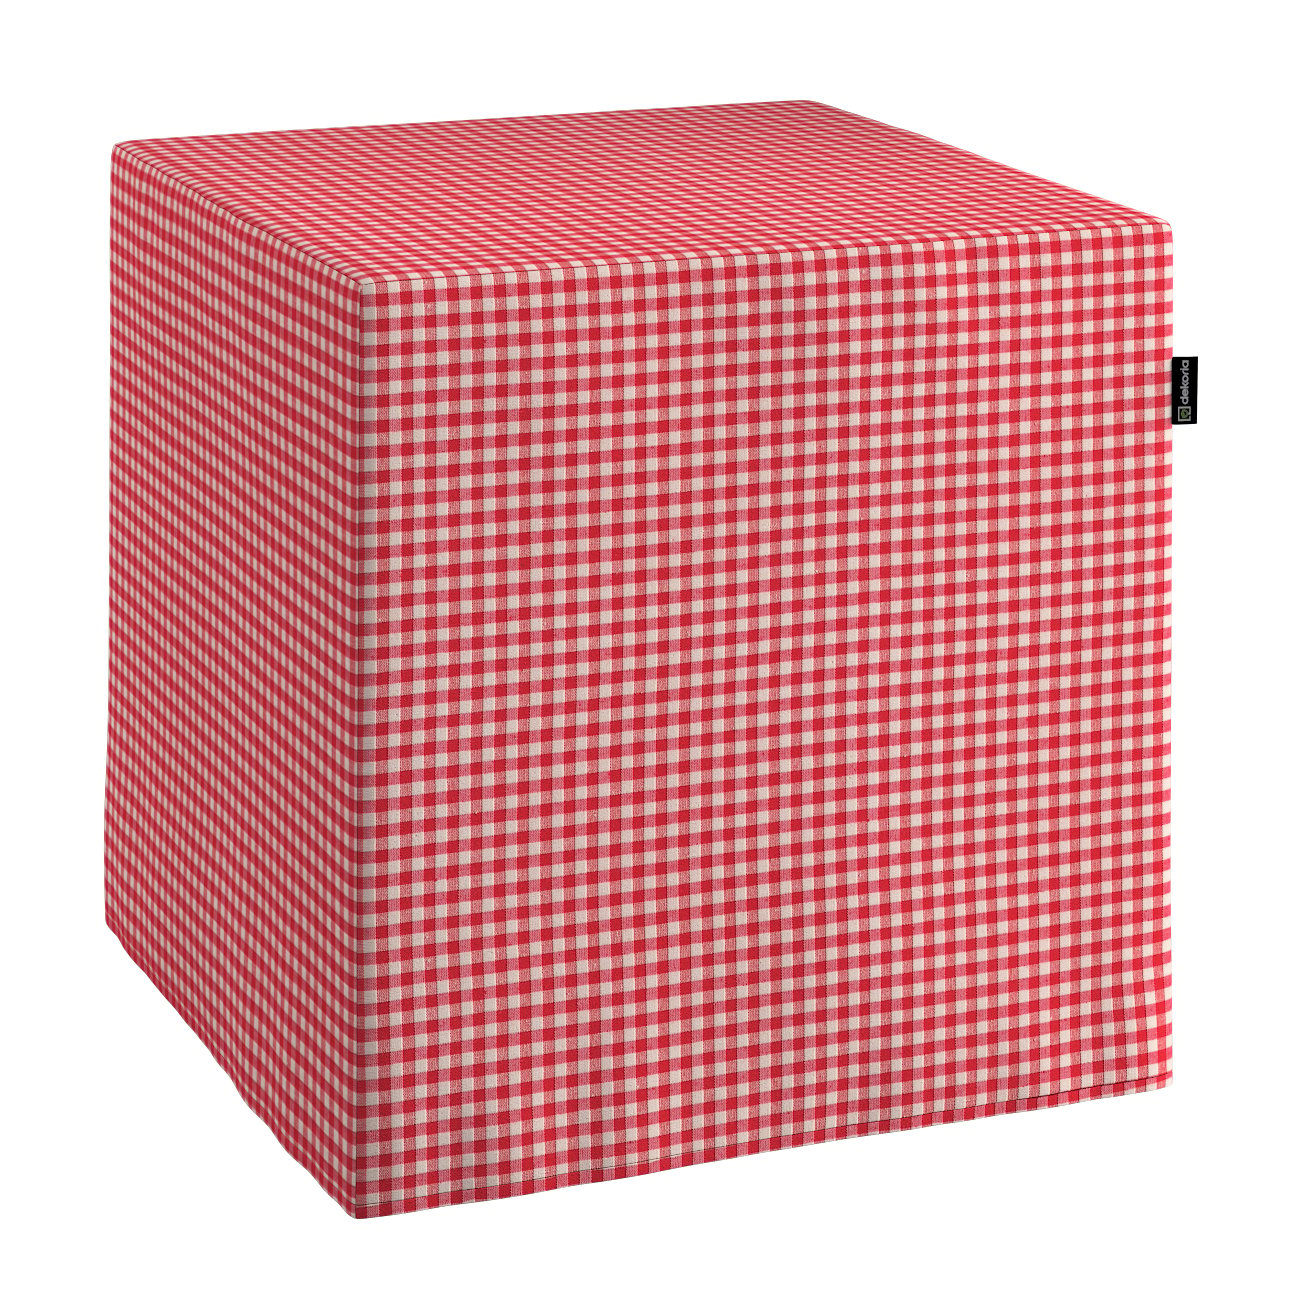 Dekoria Taburetka tvrdá, kocka, červeno-biele malé káro, 40 x 40 x 40 cm, Quadro, 136-15